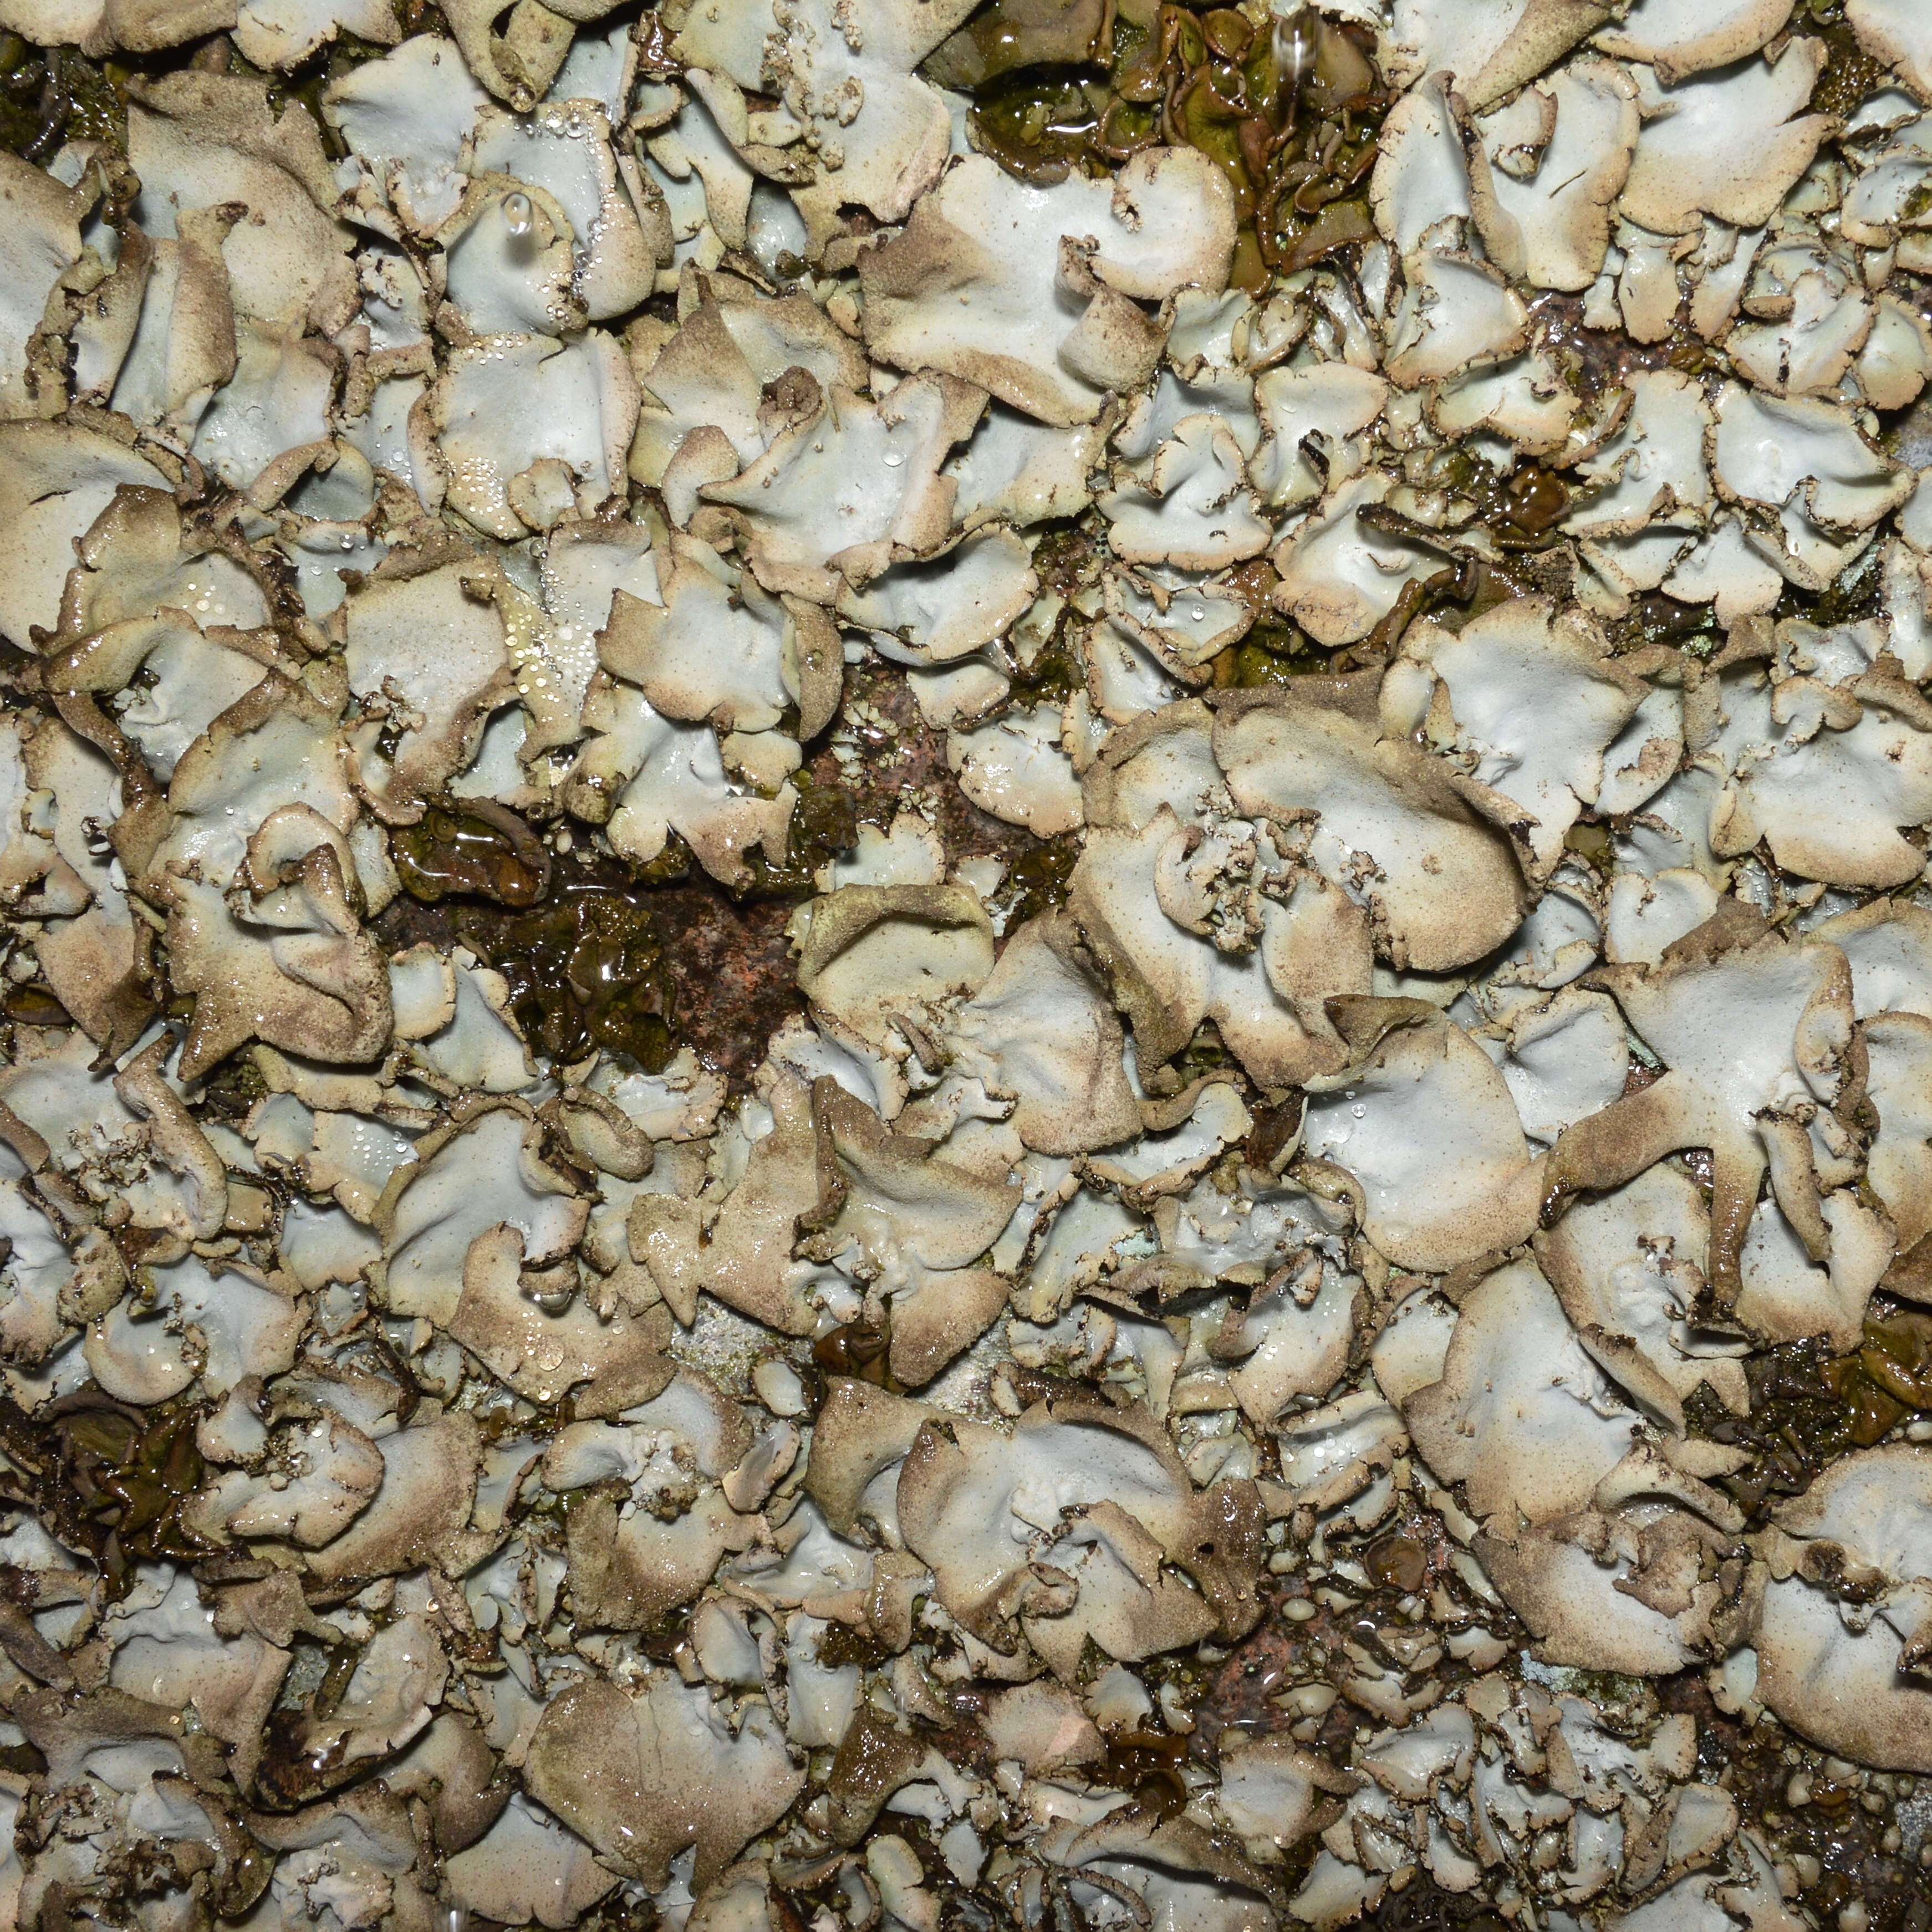 Image of Stippleback lichens